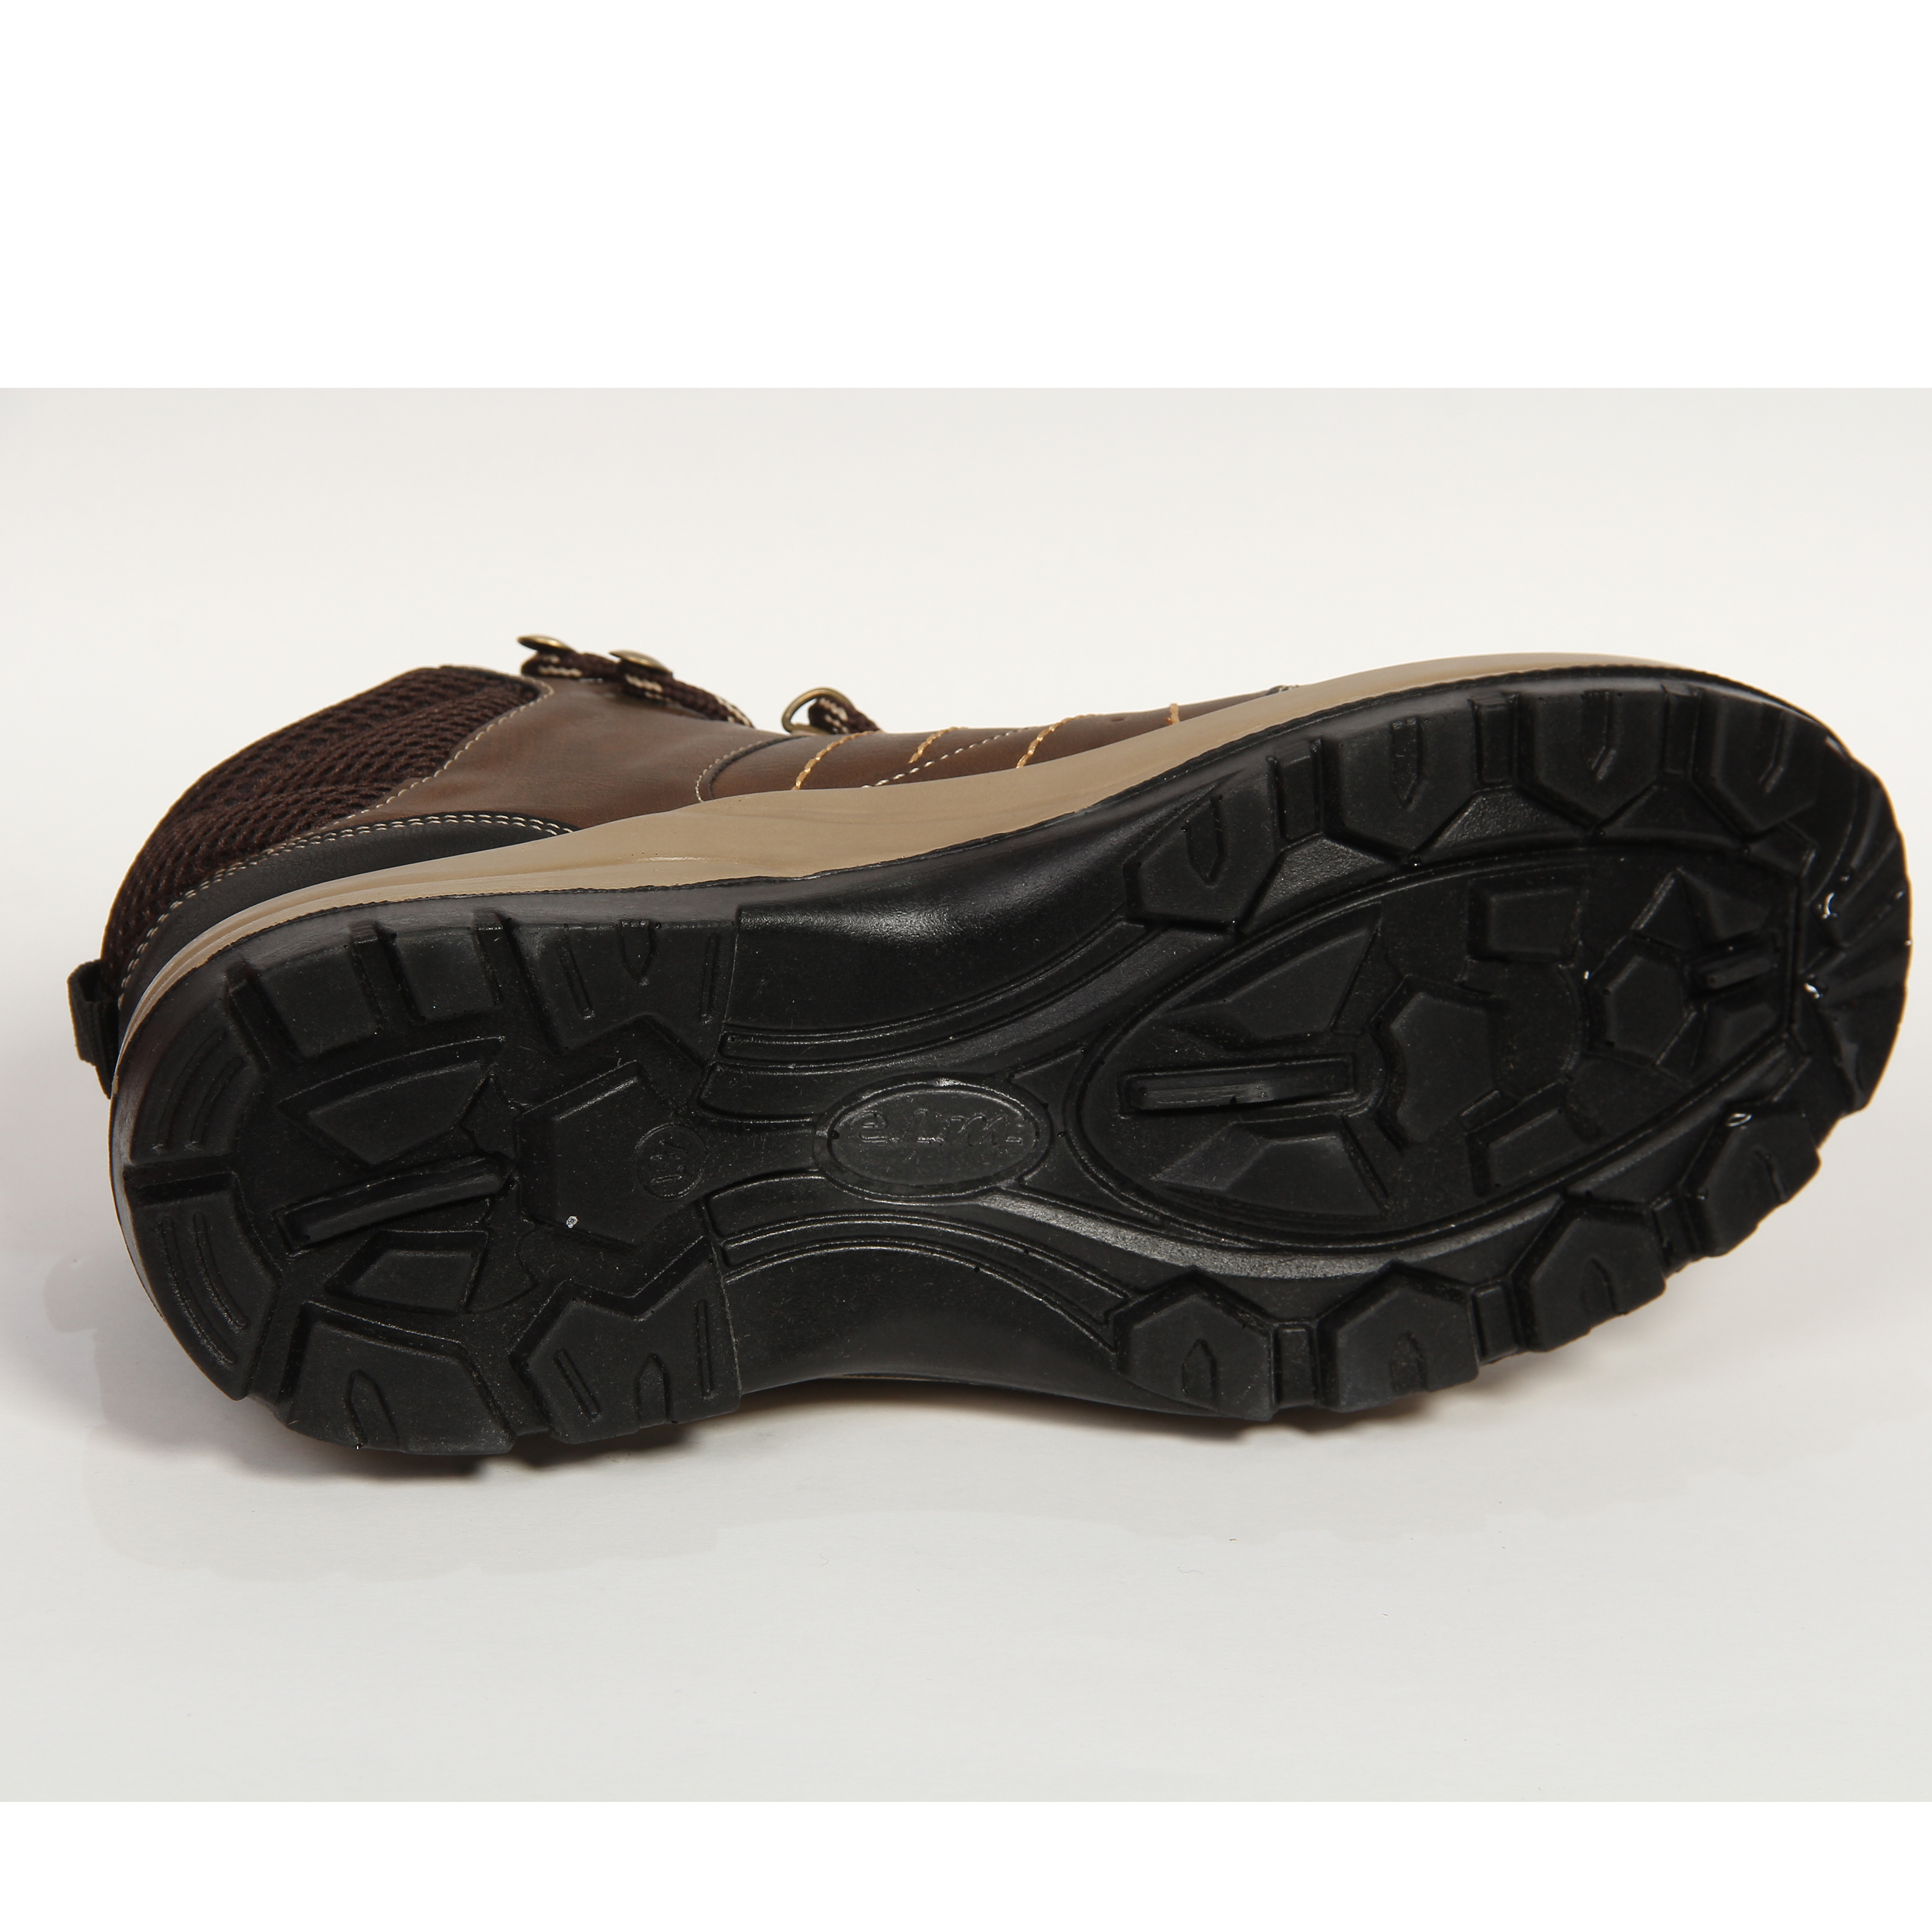 کفش کوهنوردی ای ال ام مدل ماکان الهام کد 3060052 -  - 2